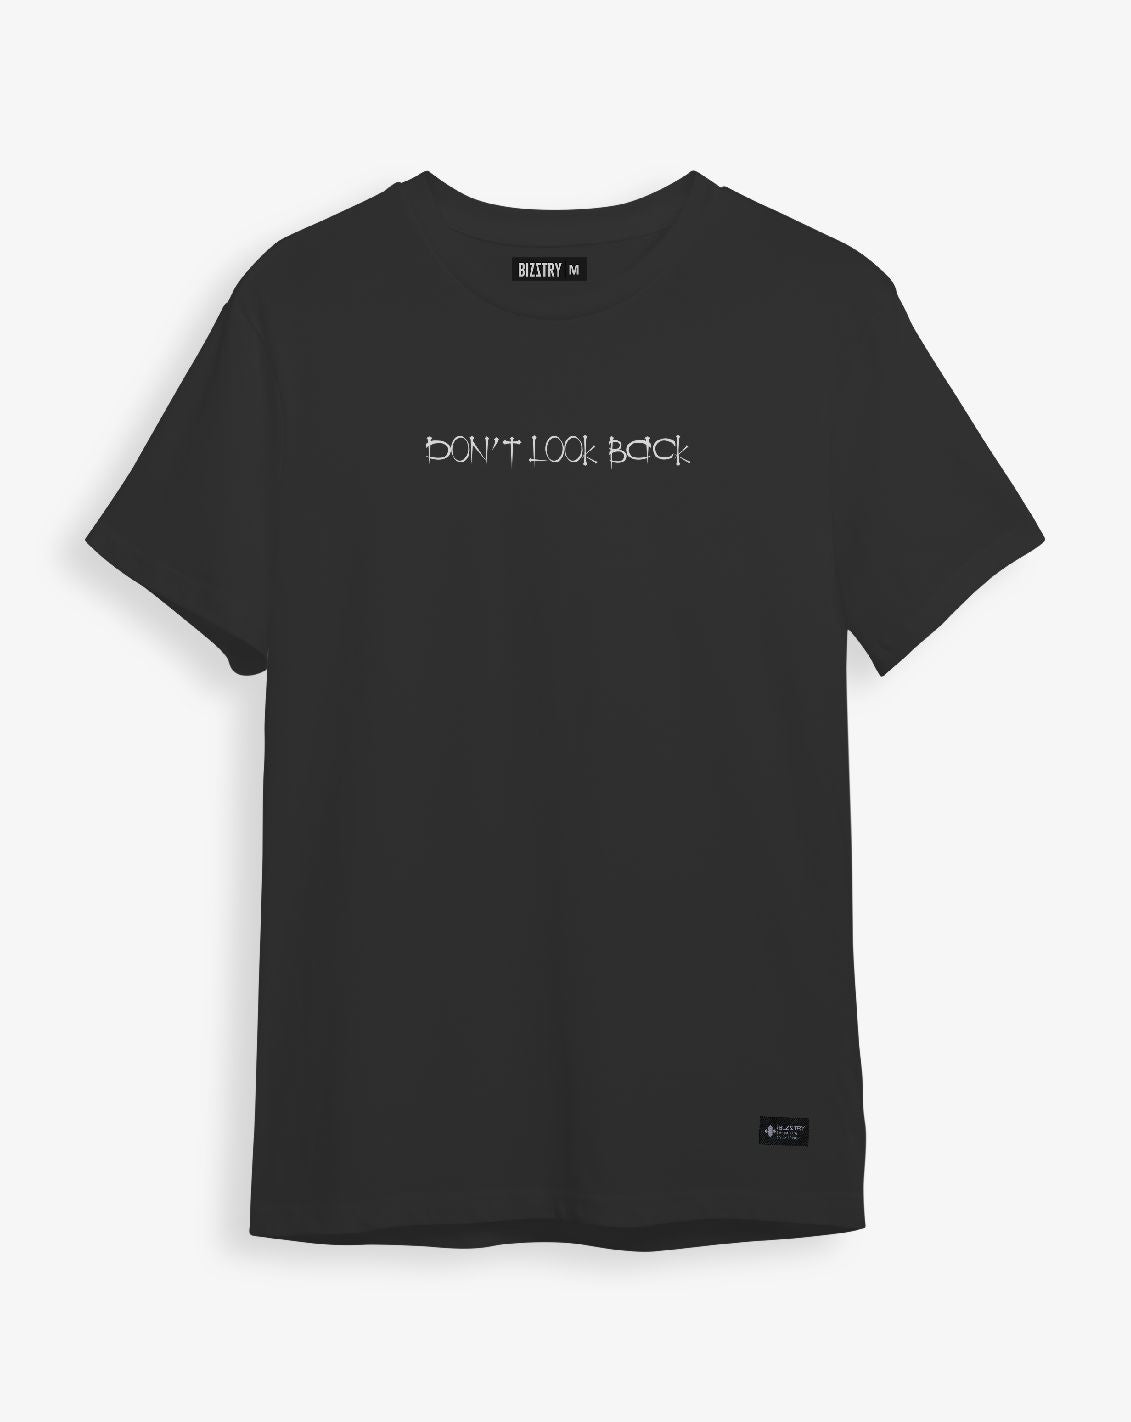 Camiseta unisex negra DONT LOOK BACK